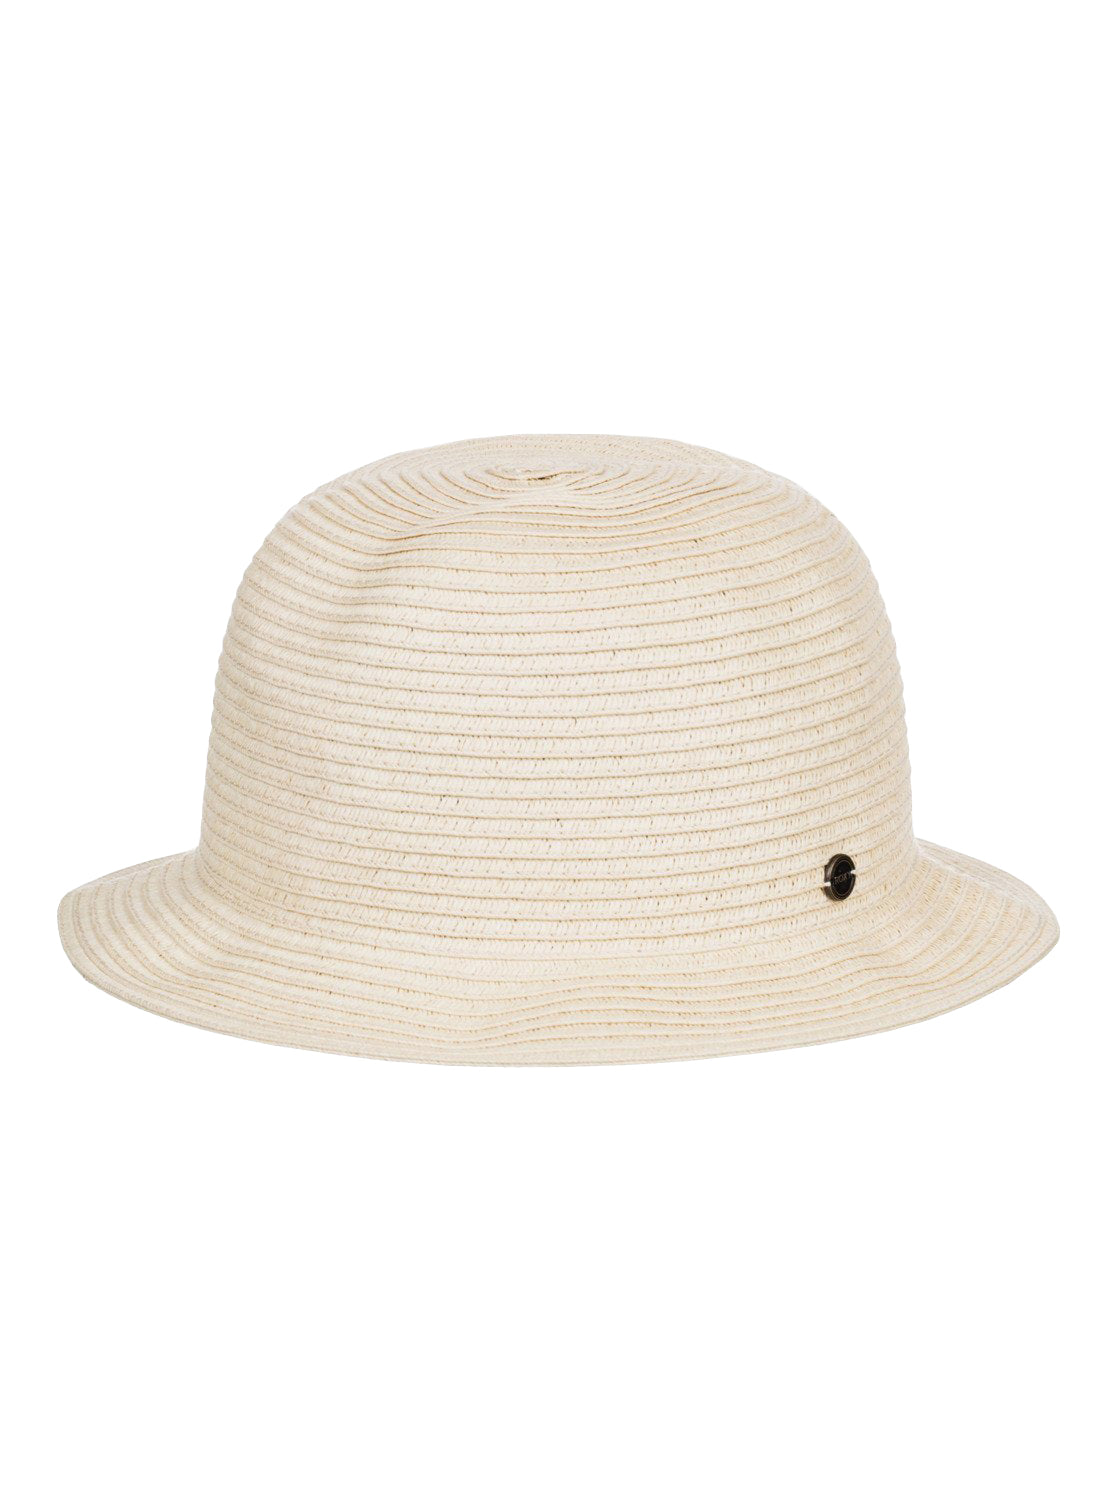 Roxy Summer Mood Bucket Hat YEF0 M/L